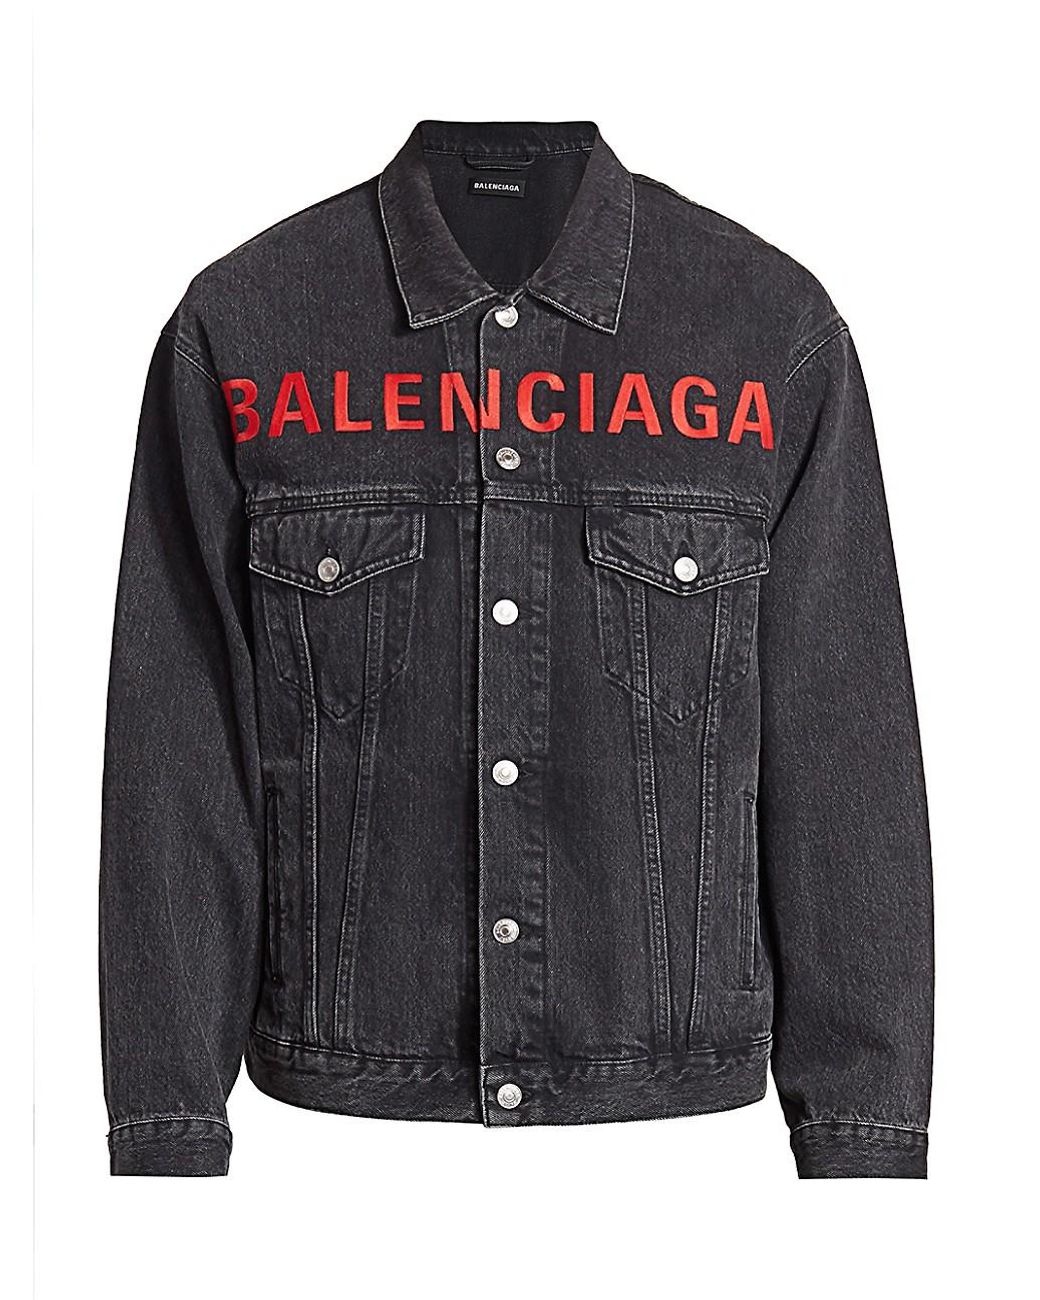 Balenciaga Embroidered Logo Denim Jacket in Black for Men - Save 18% - Lyst